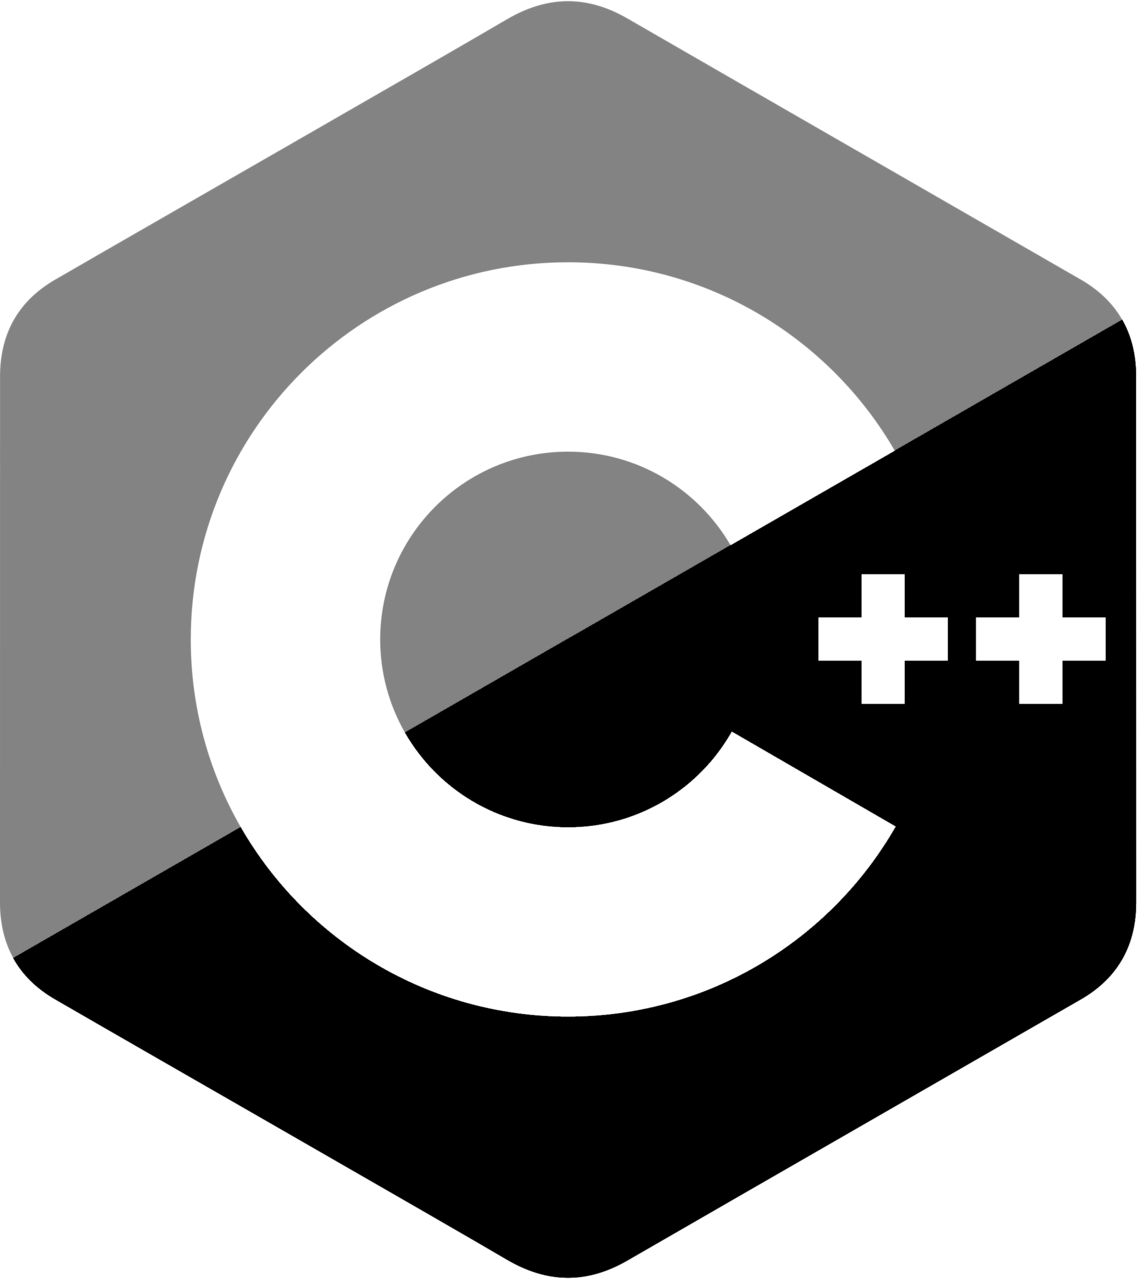 c-logo-black-and-white